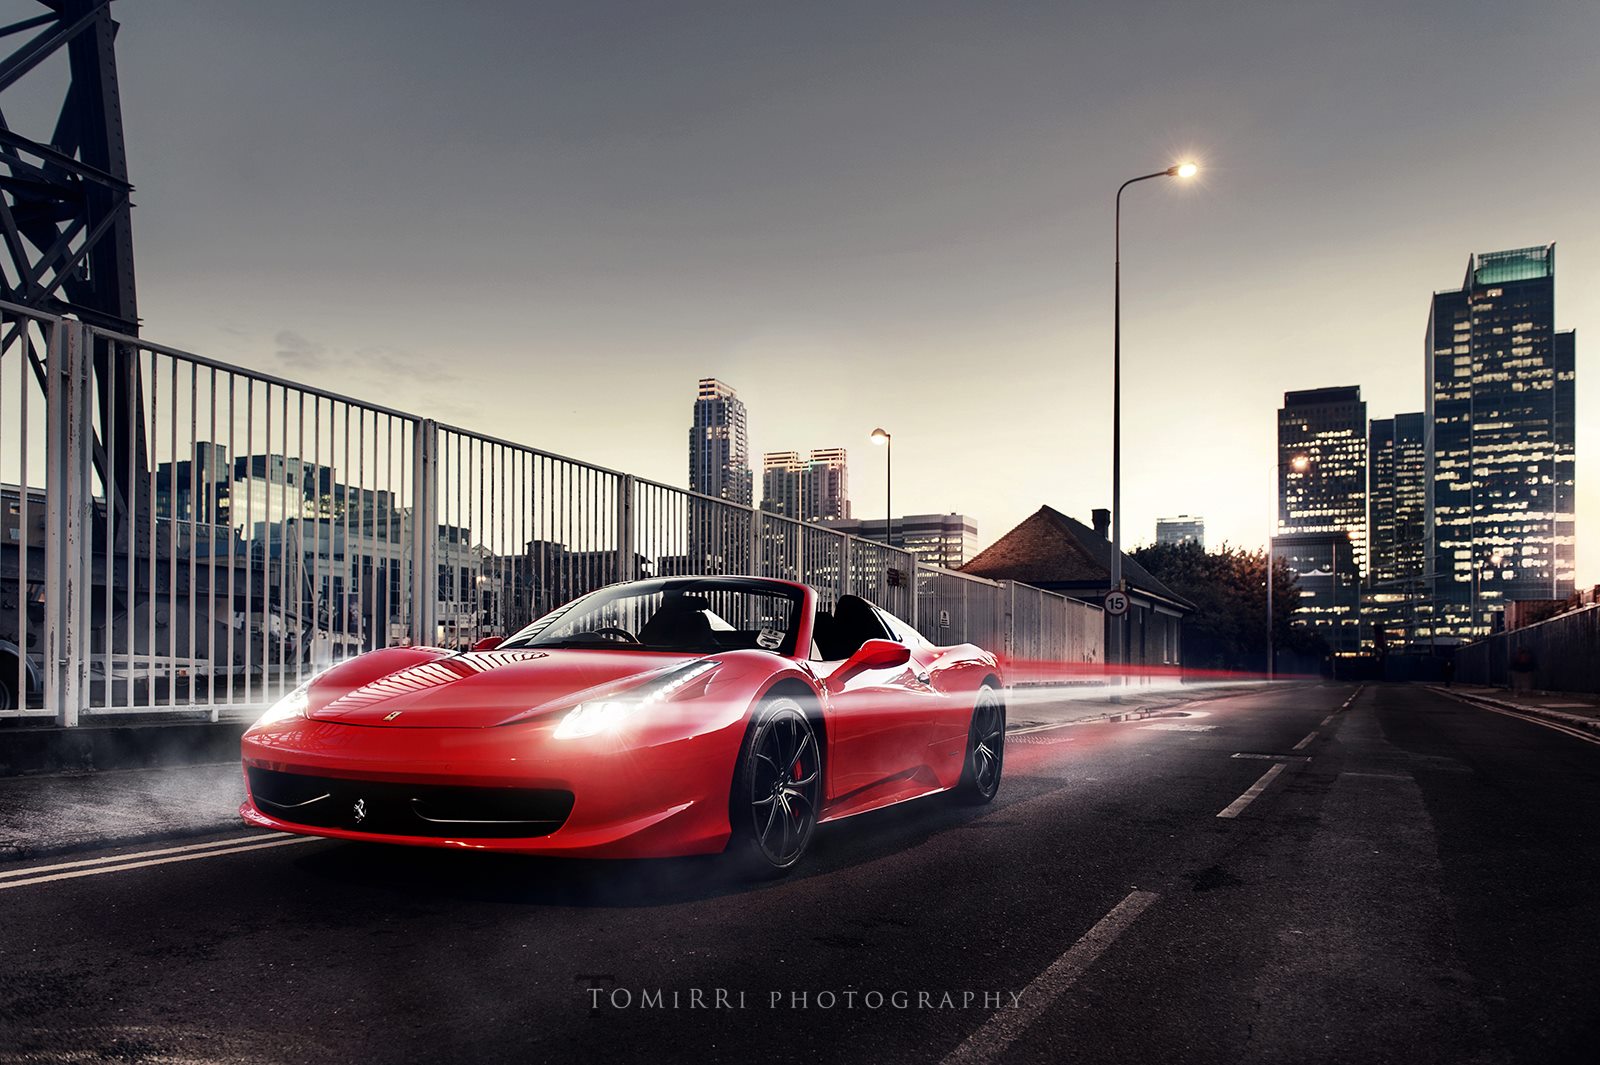 Ferrari 458 Spider Tomirri Photography